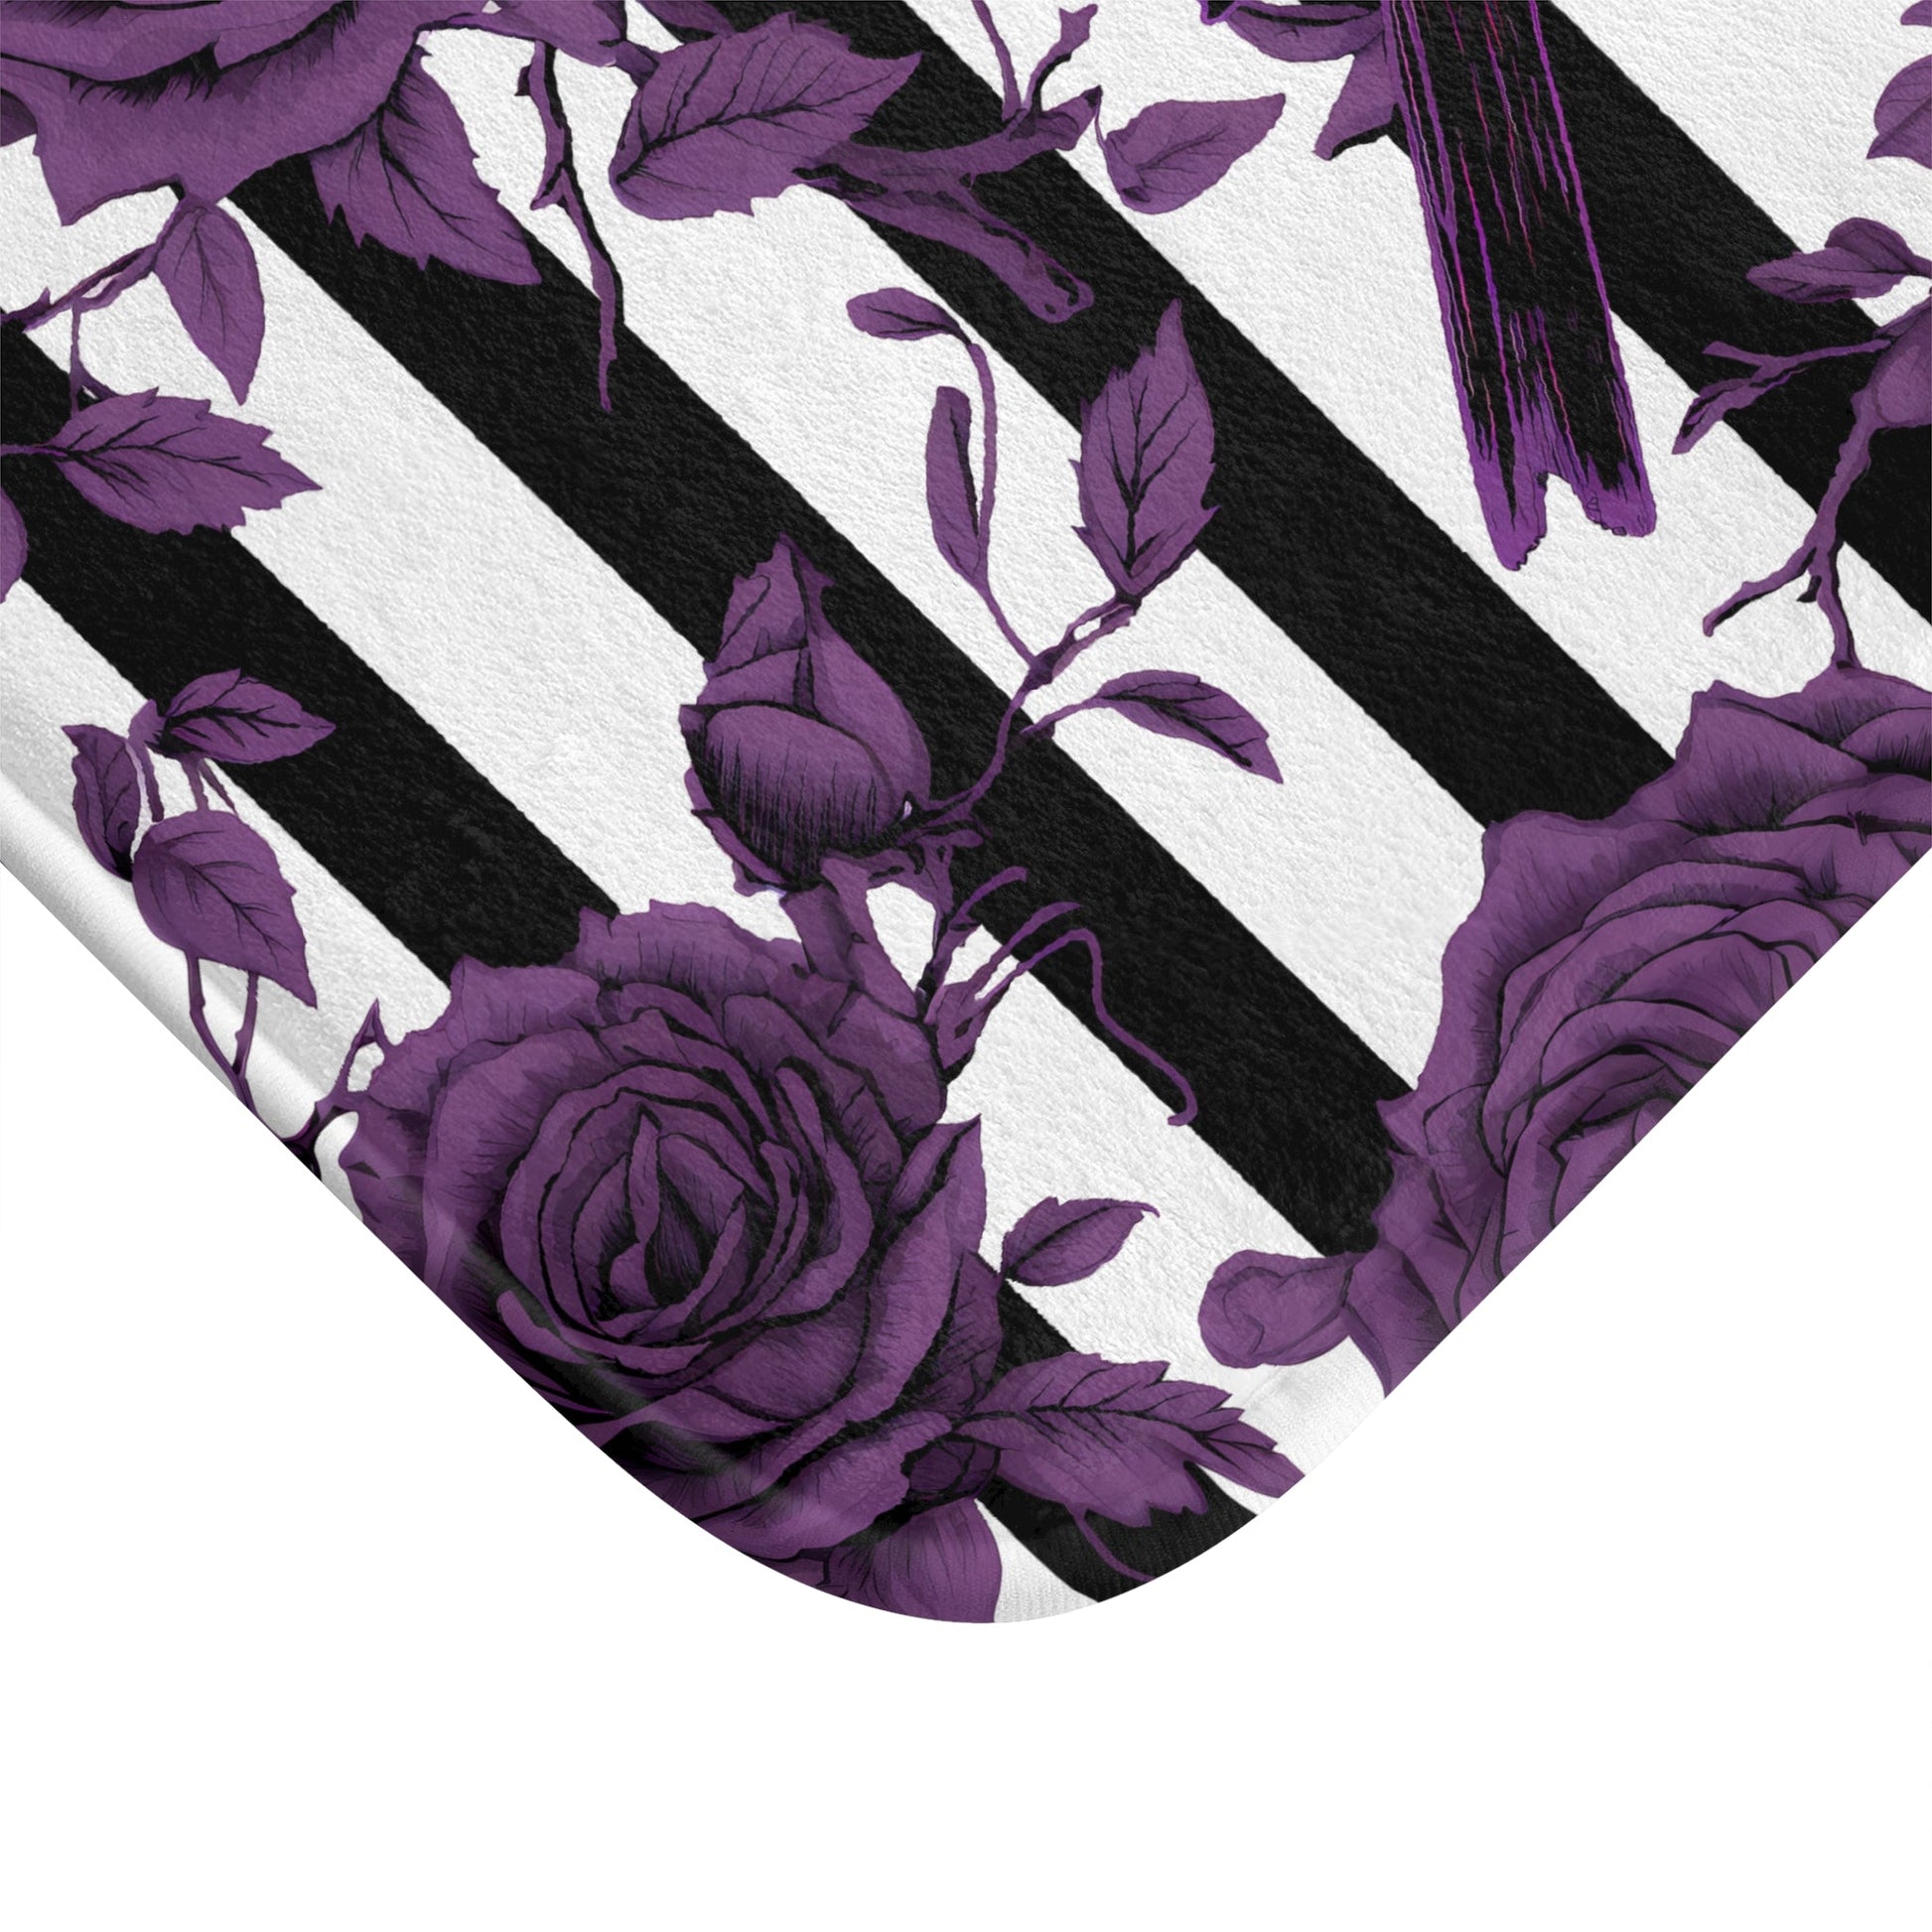 Black White Striped Purple Roses and Crows Bath MatHome DecorVTZdesigns24" × 17"baroqueBathBathroom